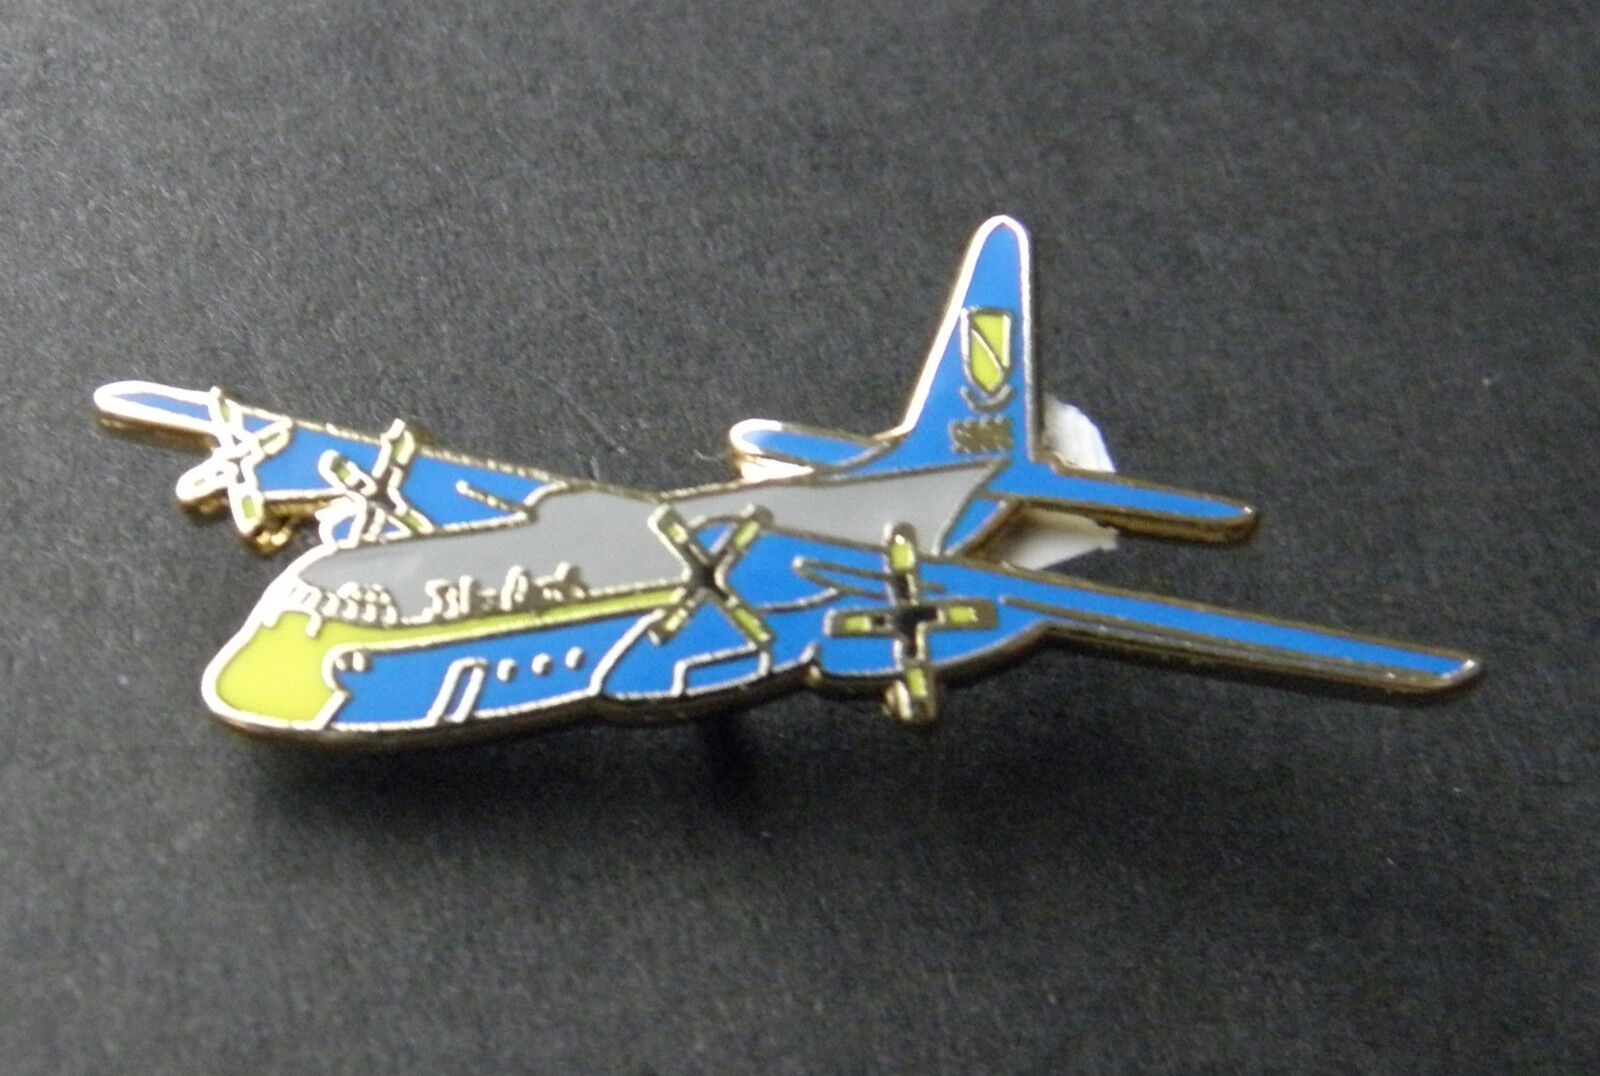 LOCKHEED HERCULES C-130 USN BLUE ANGELS AIRCRAFT LAPEL PIN BADGE 1.5 INCHES